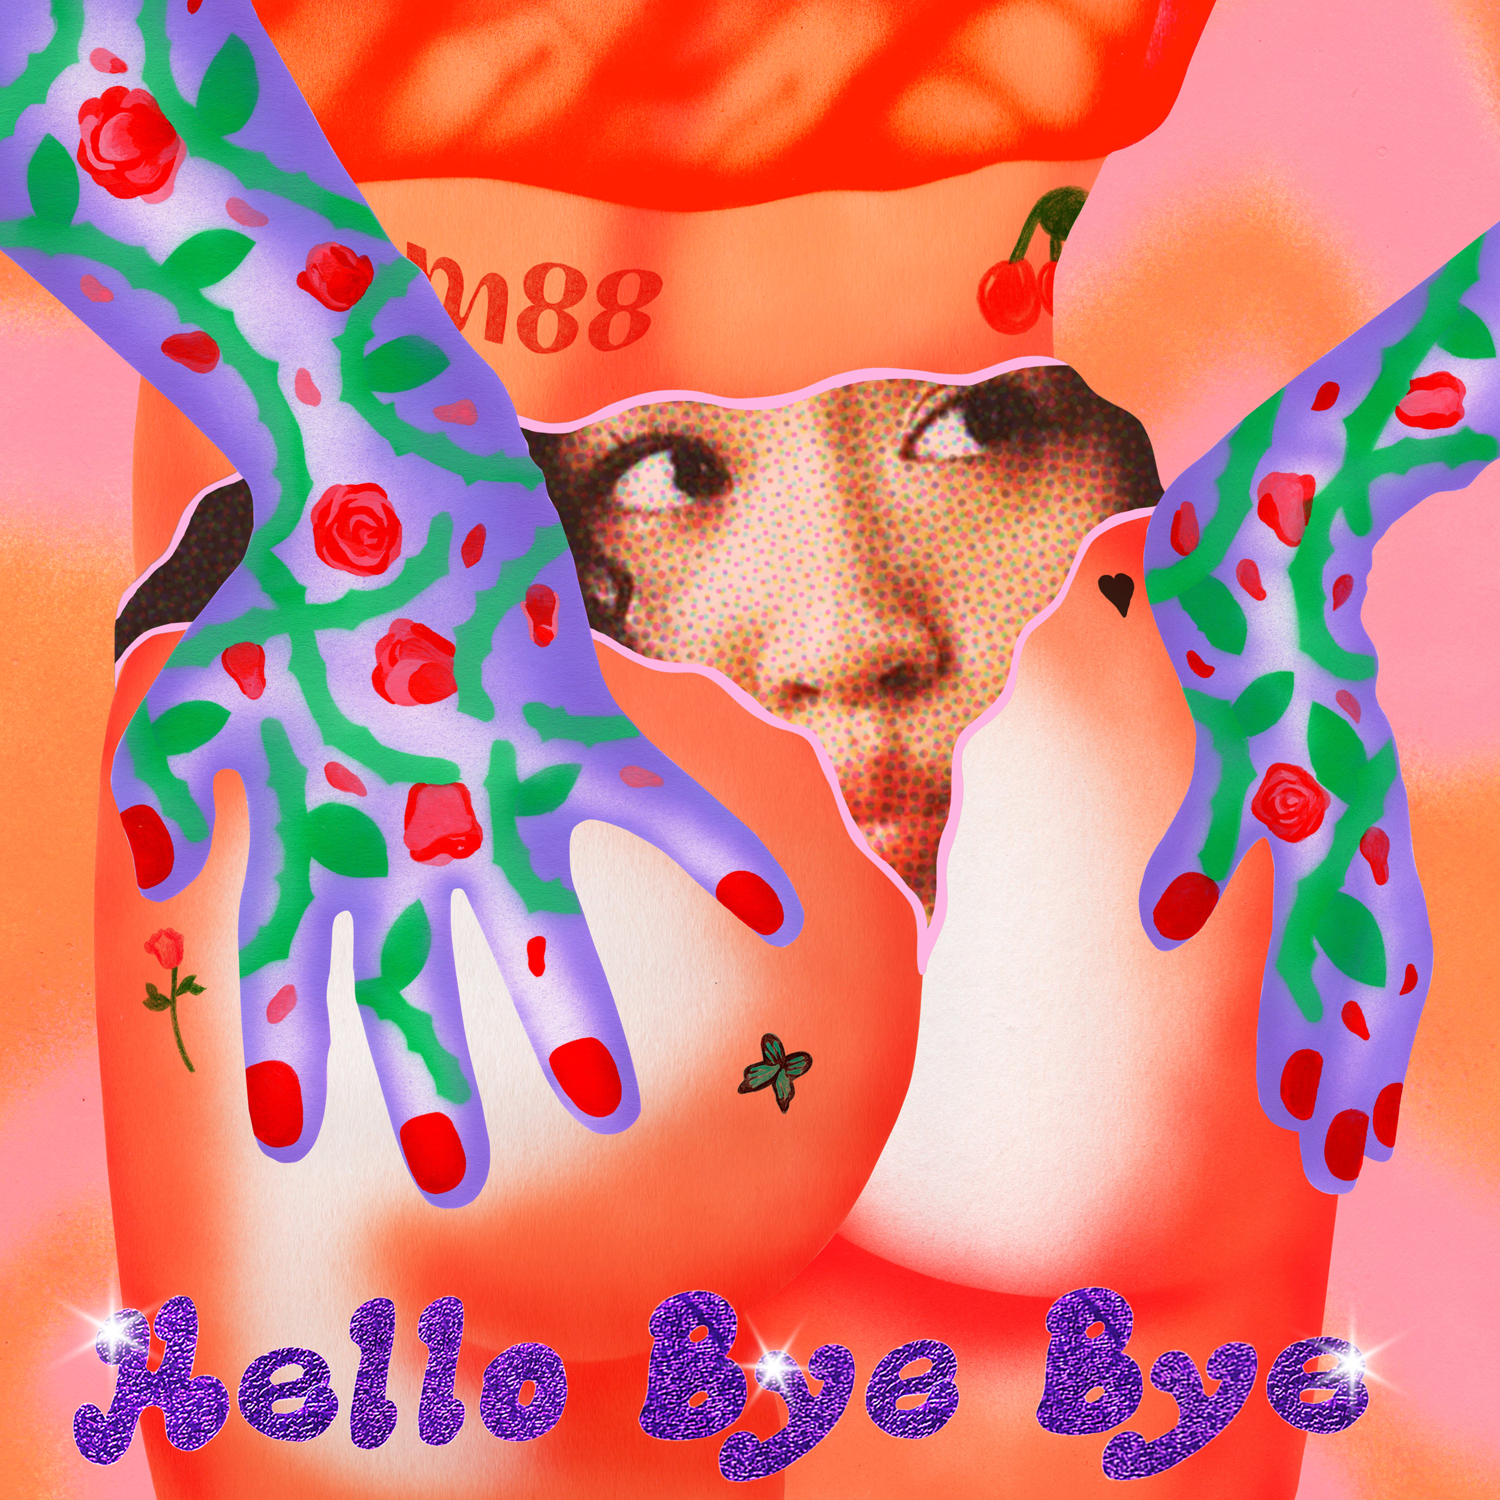 9m88 'Hello Bye Bye'